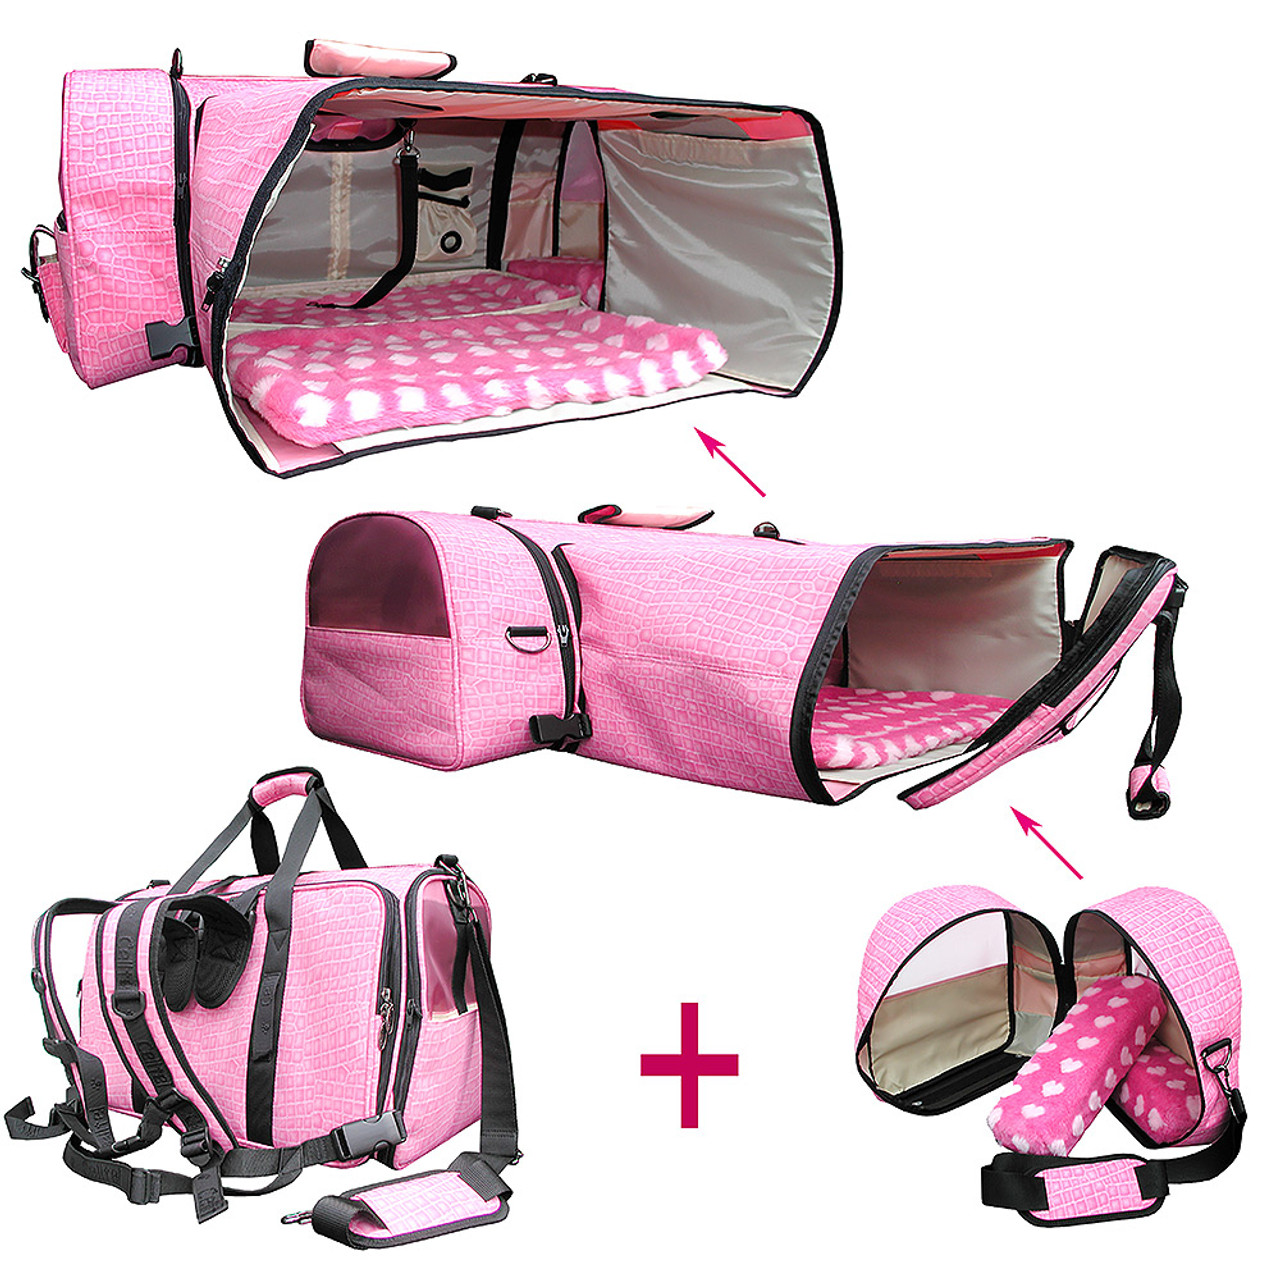 Under One Sky Girl'S Spirited Check Backpack - Pink Multi for Women